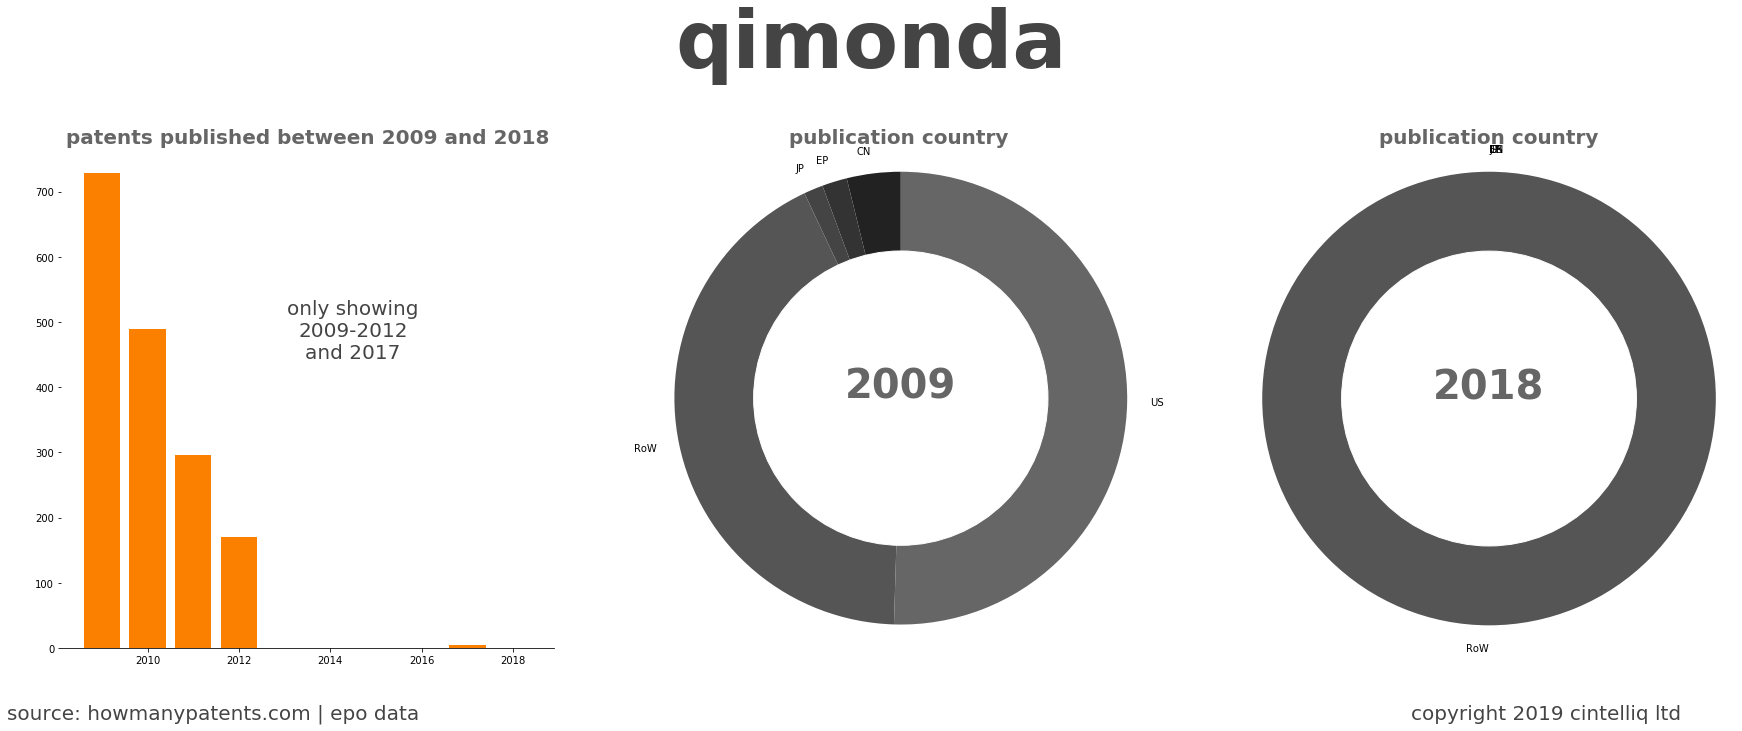 summary of patents for Qimonda